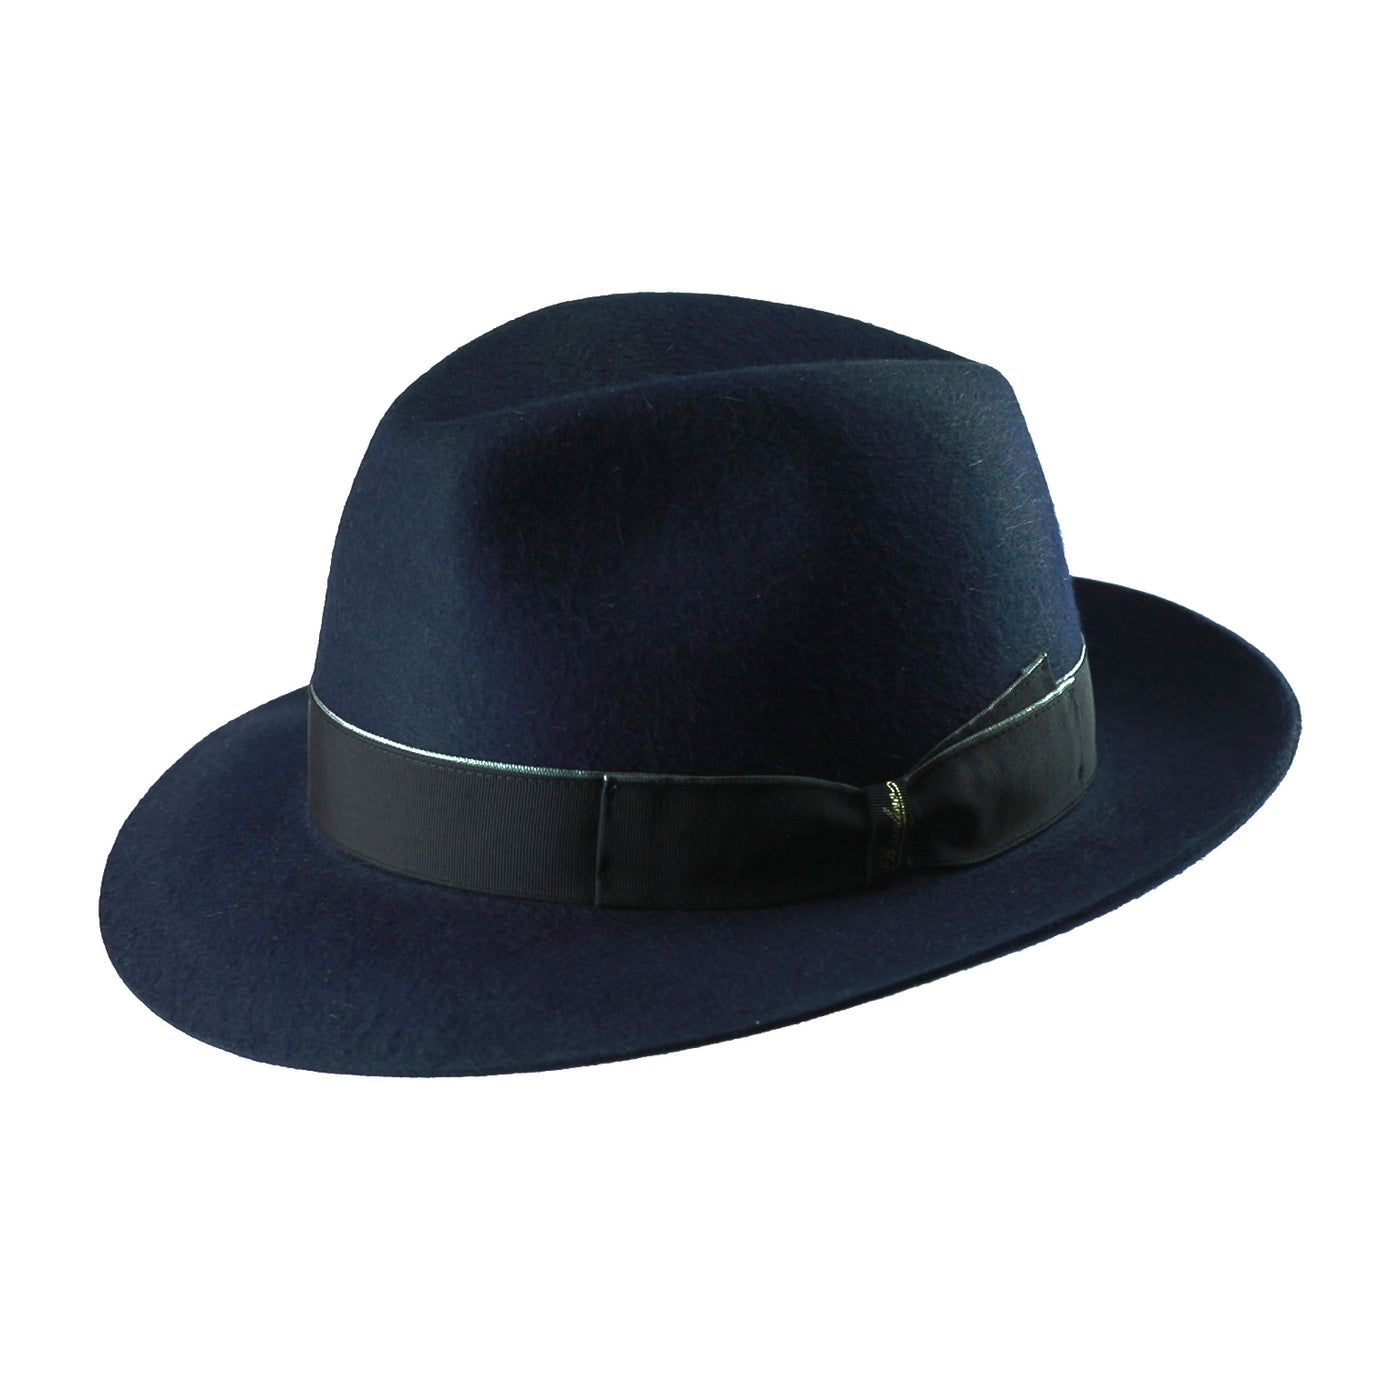 Seta 238 - Blue, product_type] - Borsalino for Atica fedora hat